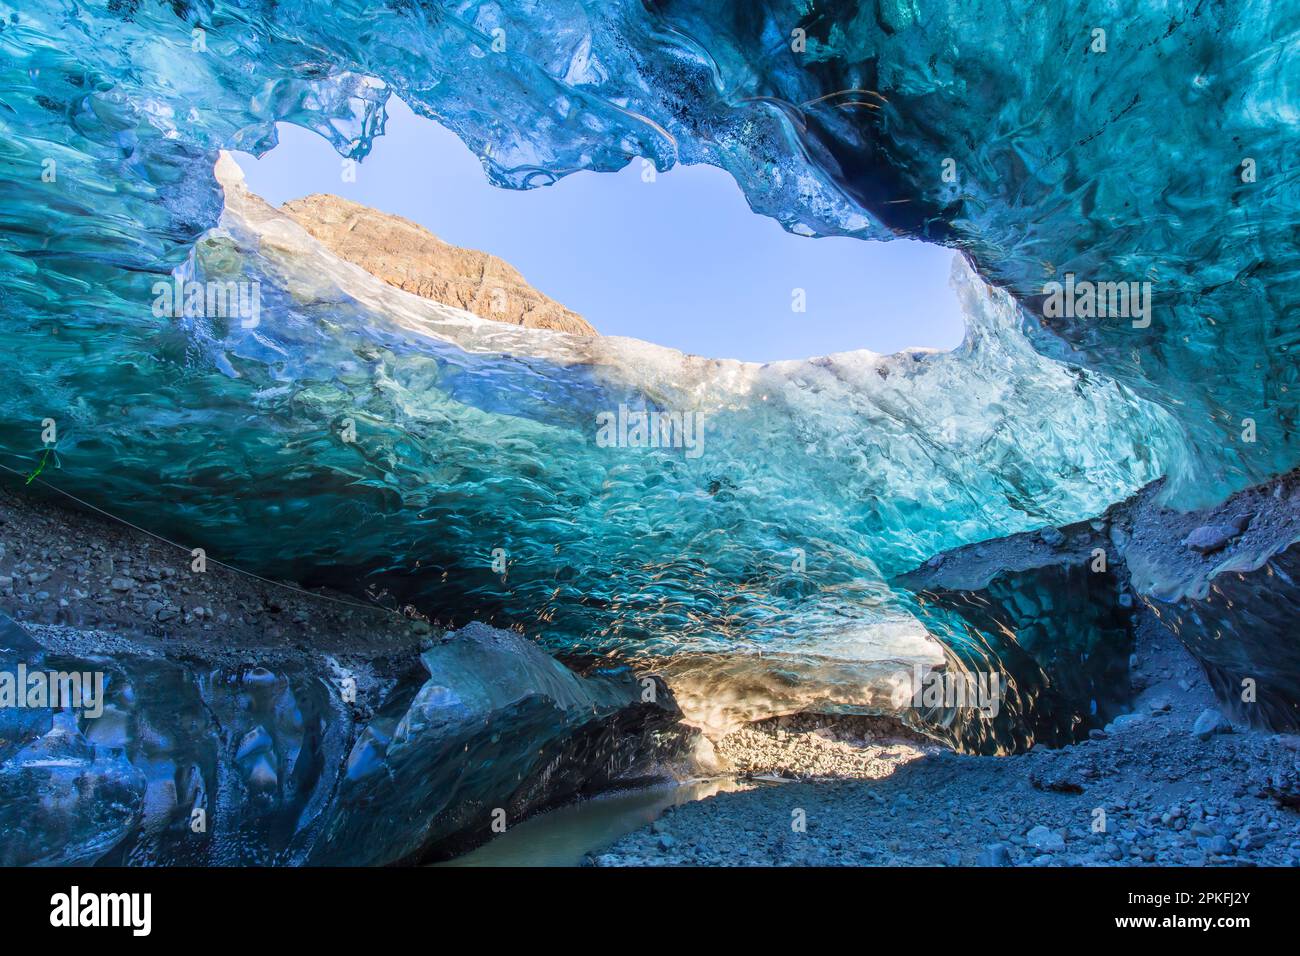 La grotta di ghiaccio naturale di cristallo nel ghiacciaio di Breiðamerkurjökull / Breidamerkurjokull nel Parco Nazionale di Vatnajökull, Islanda Foto Stock